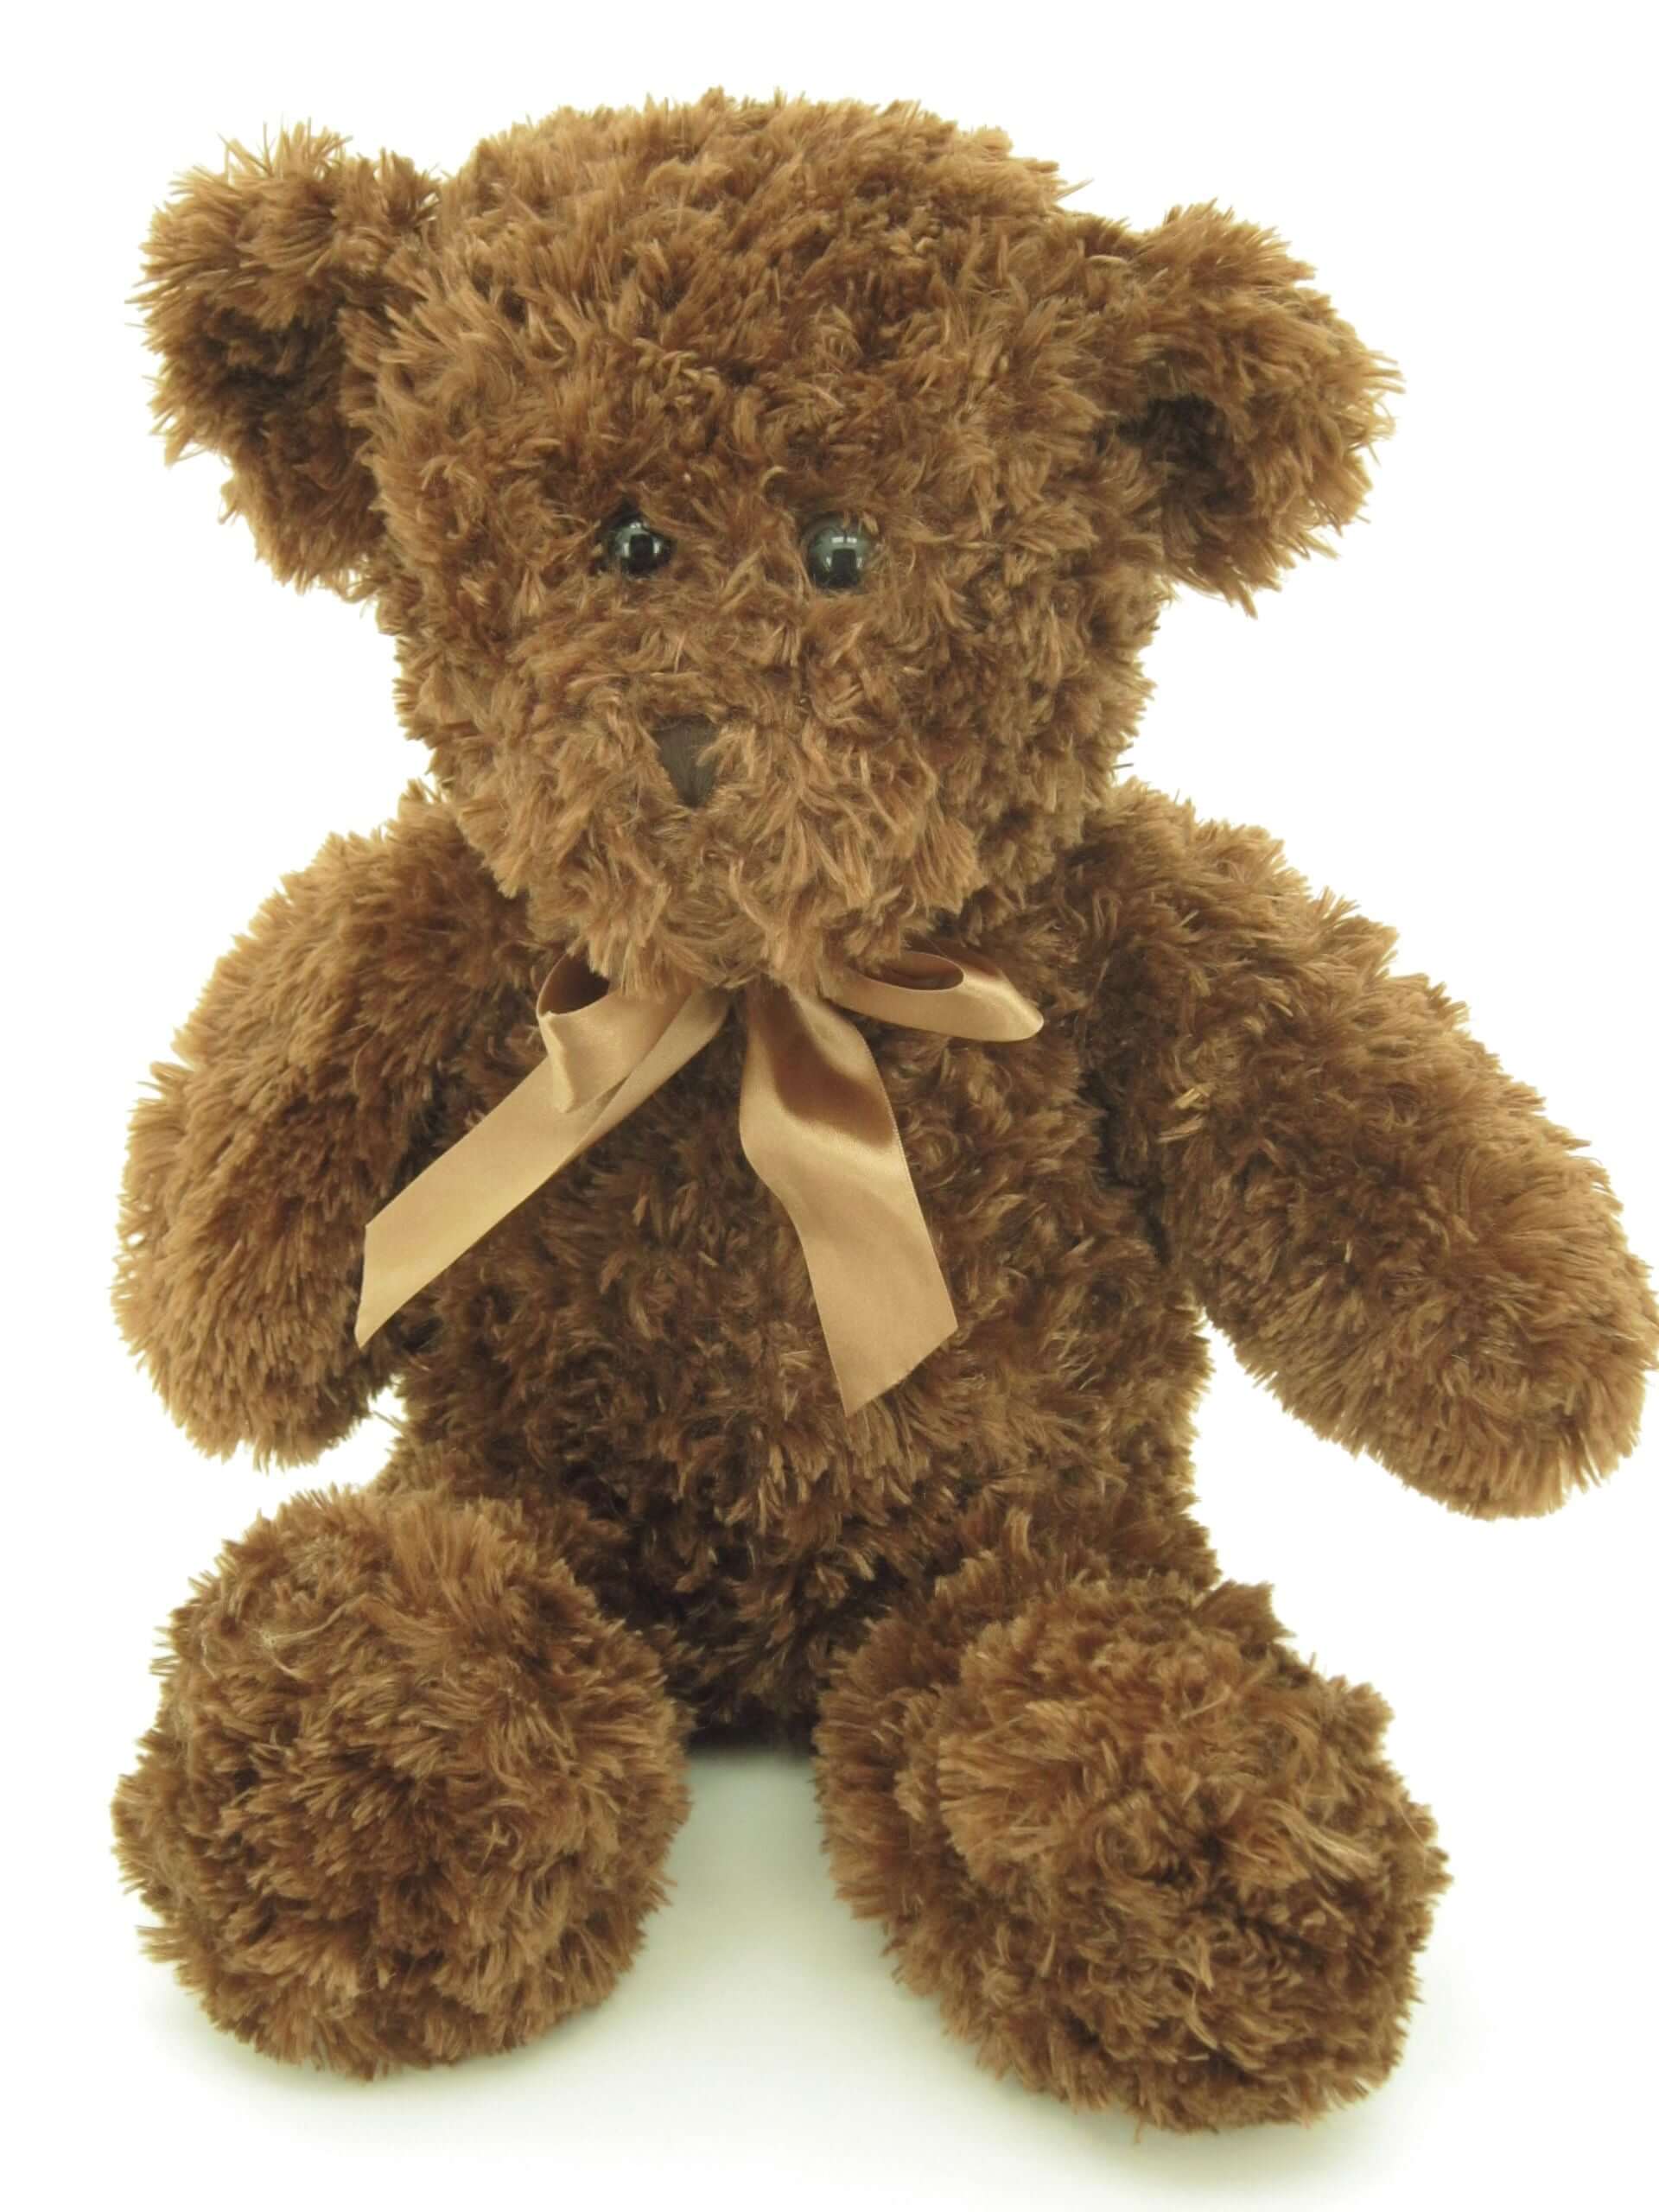 teddybär kuscheltier schlenkerbär - lockiger teddy 60cm - chocobraun